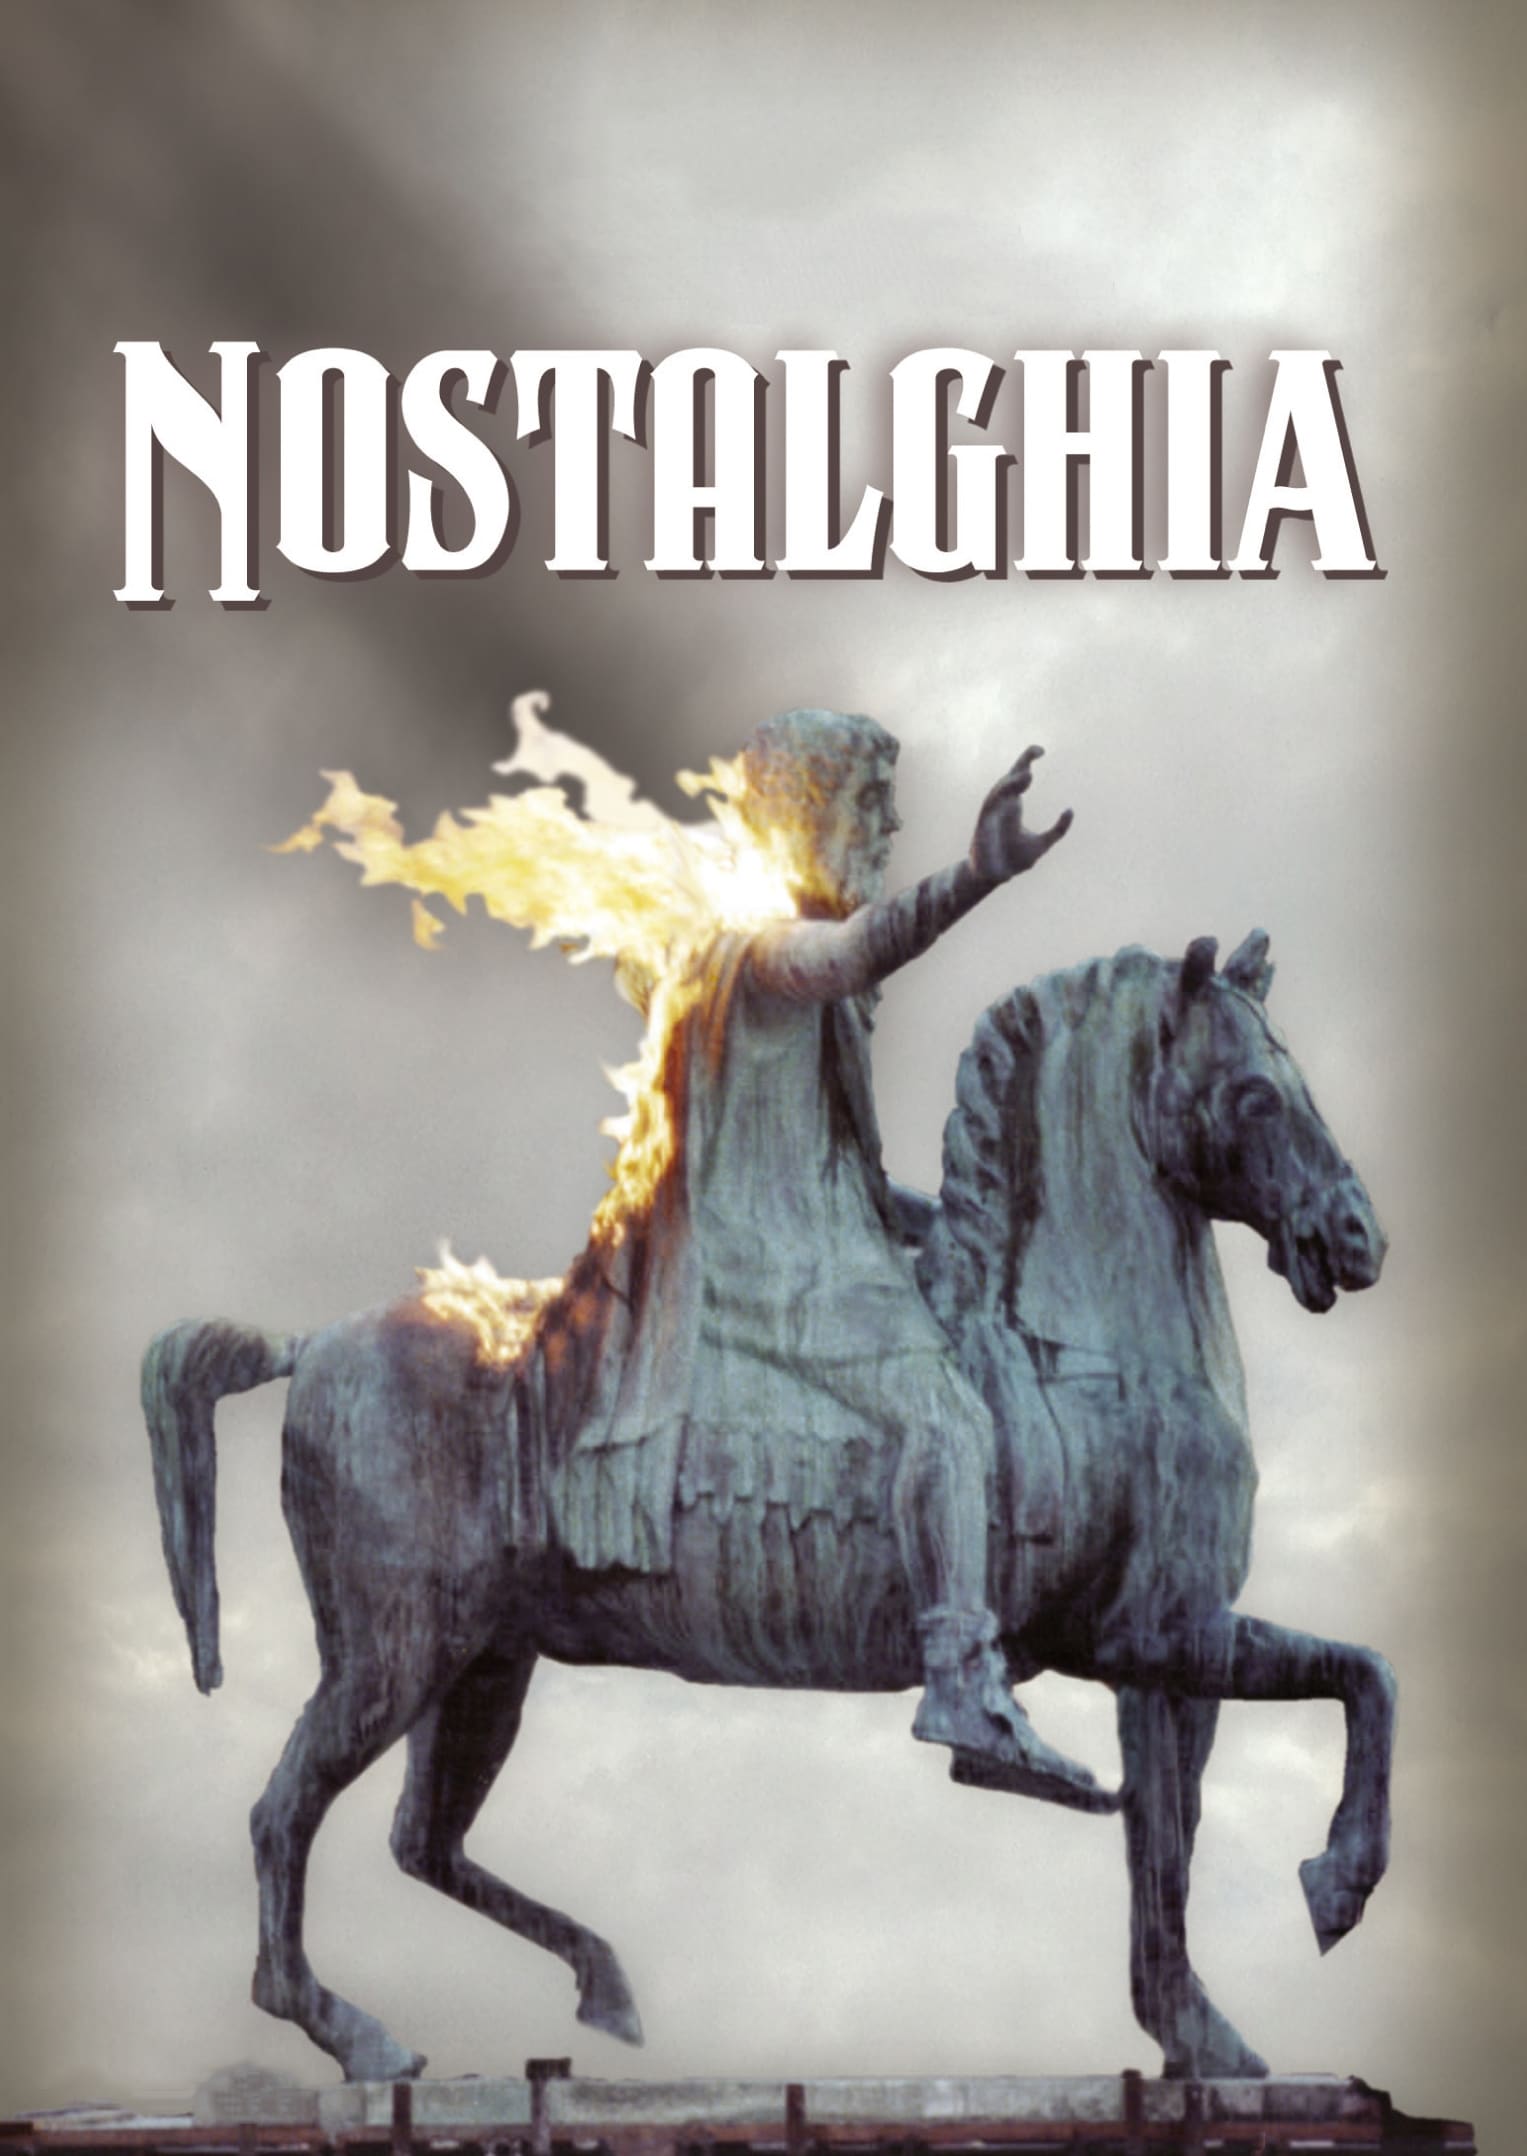 Nostalghia [HD] (1983)